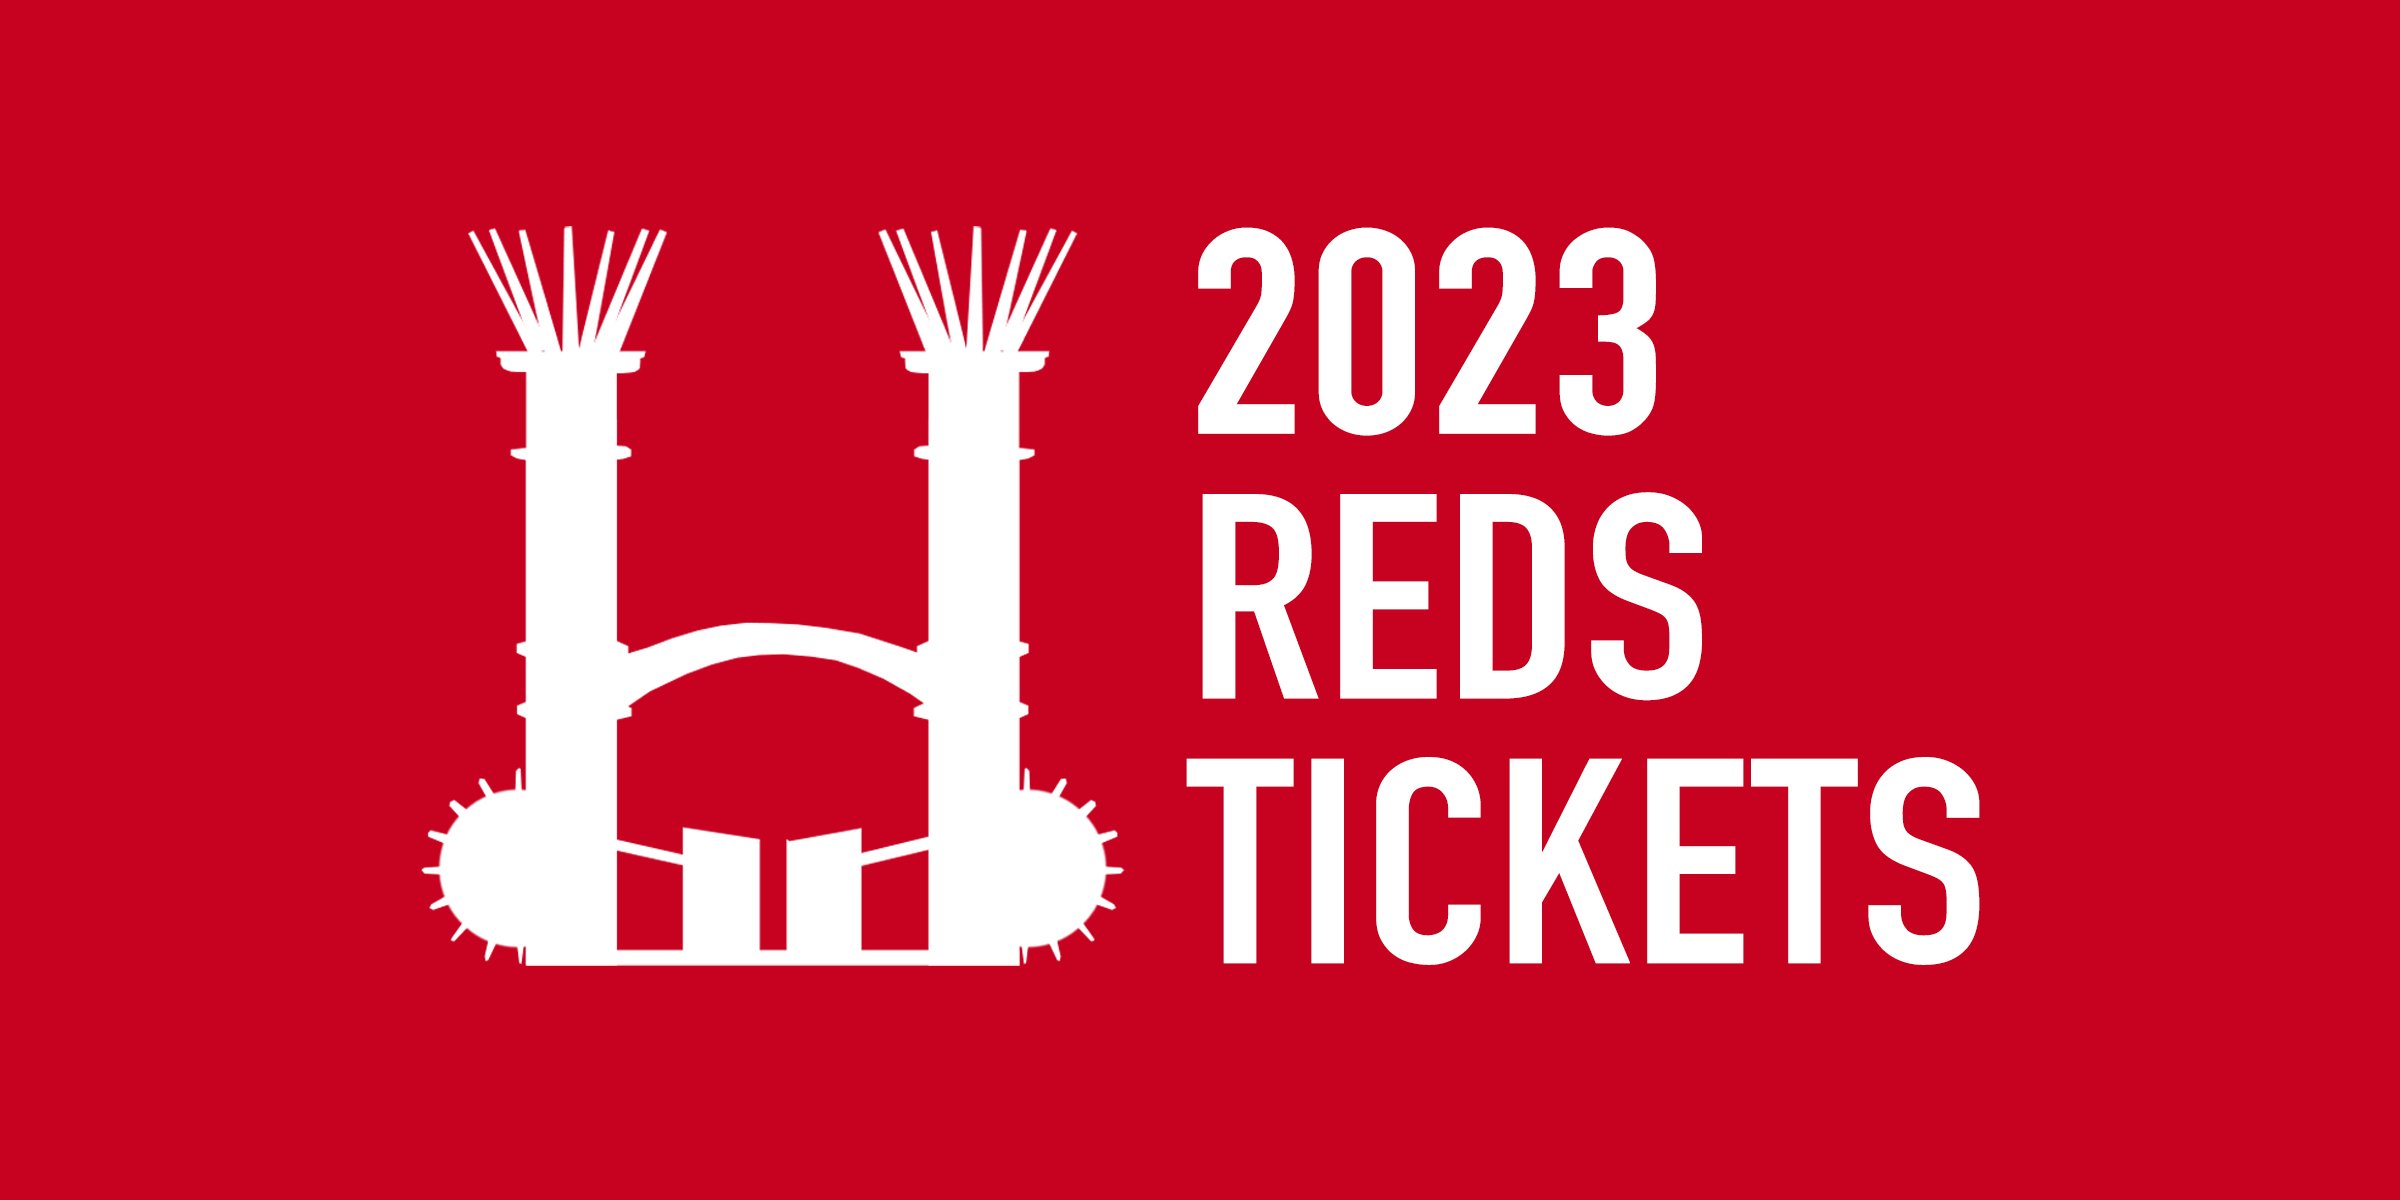 2023 Cincinnati Reds schedule: Spring training in Goodyear, Arizona